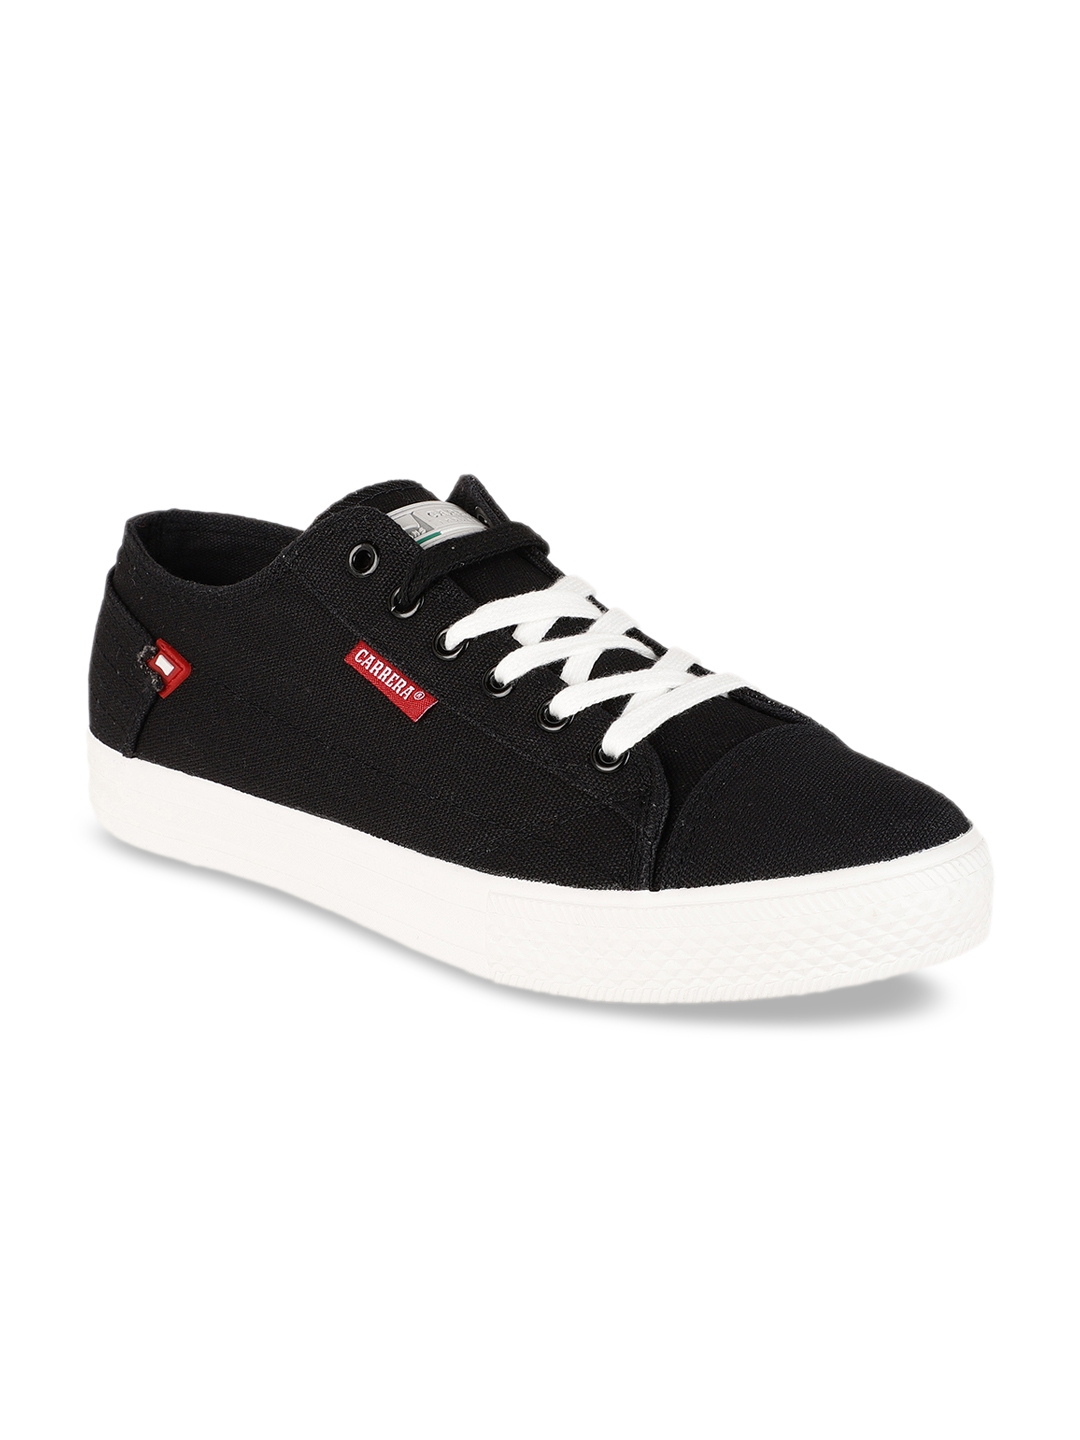 Buy Carrera Men Black Solid Sneakers - Casual Shoes for Men 10280963 ...